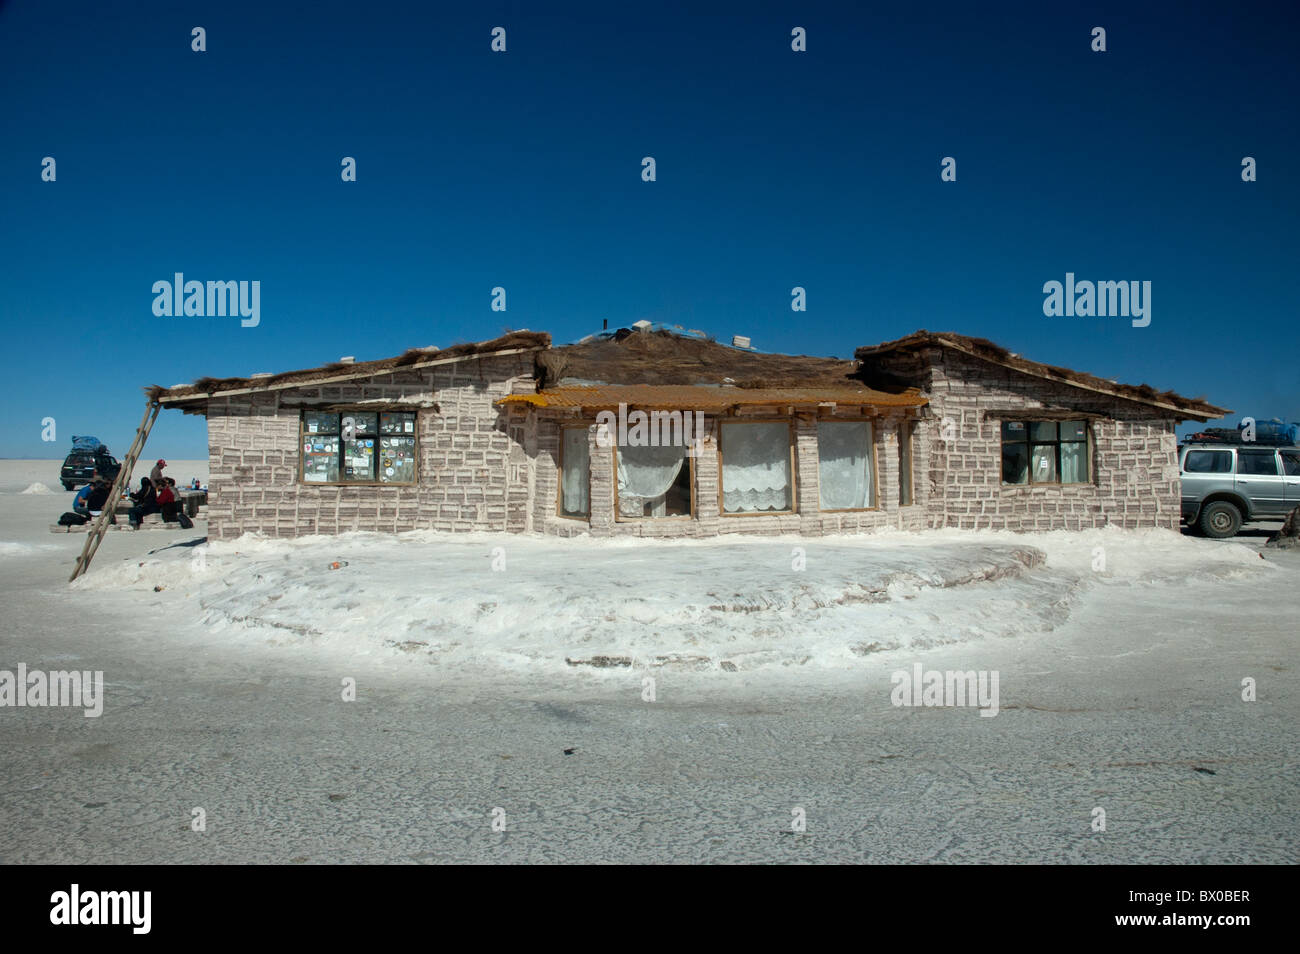 Building blocks used to construct the Salt Hotel, Salar de Uyuni salt flats, Bolivia. Stock Photo